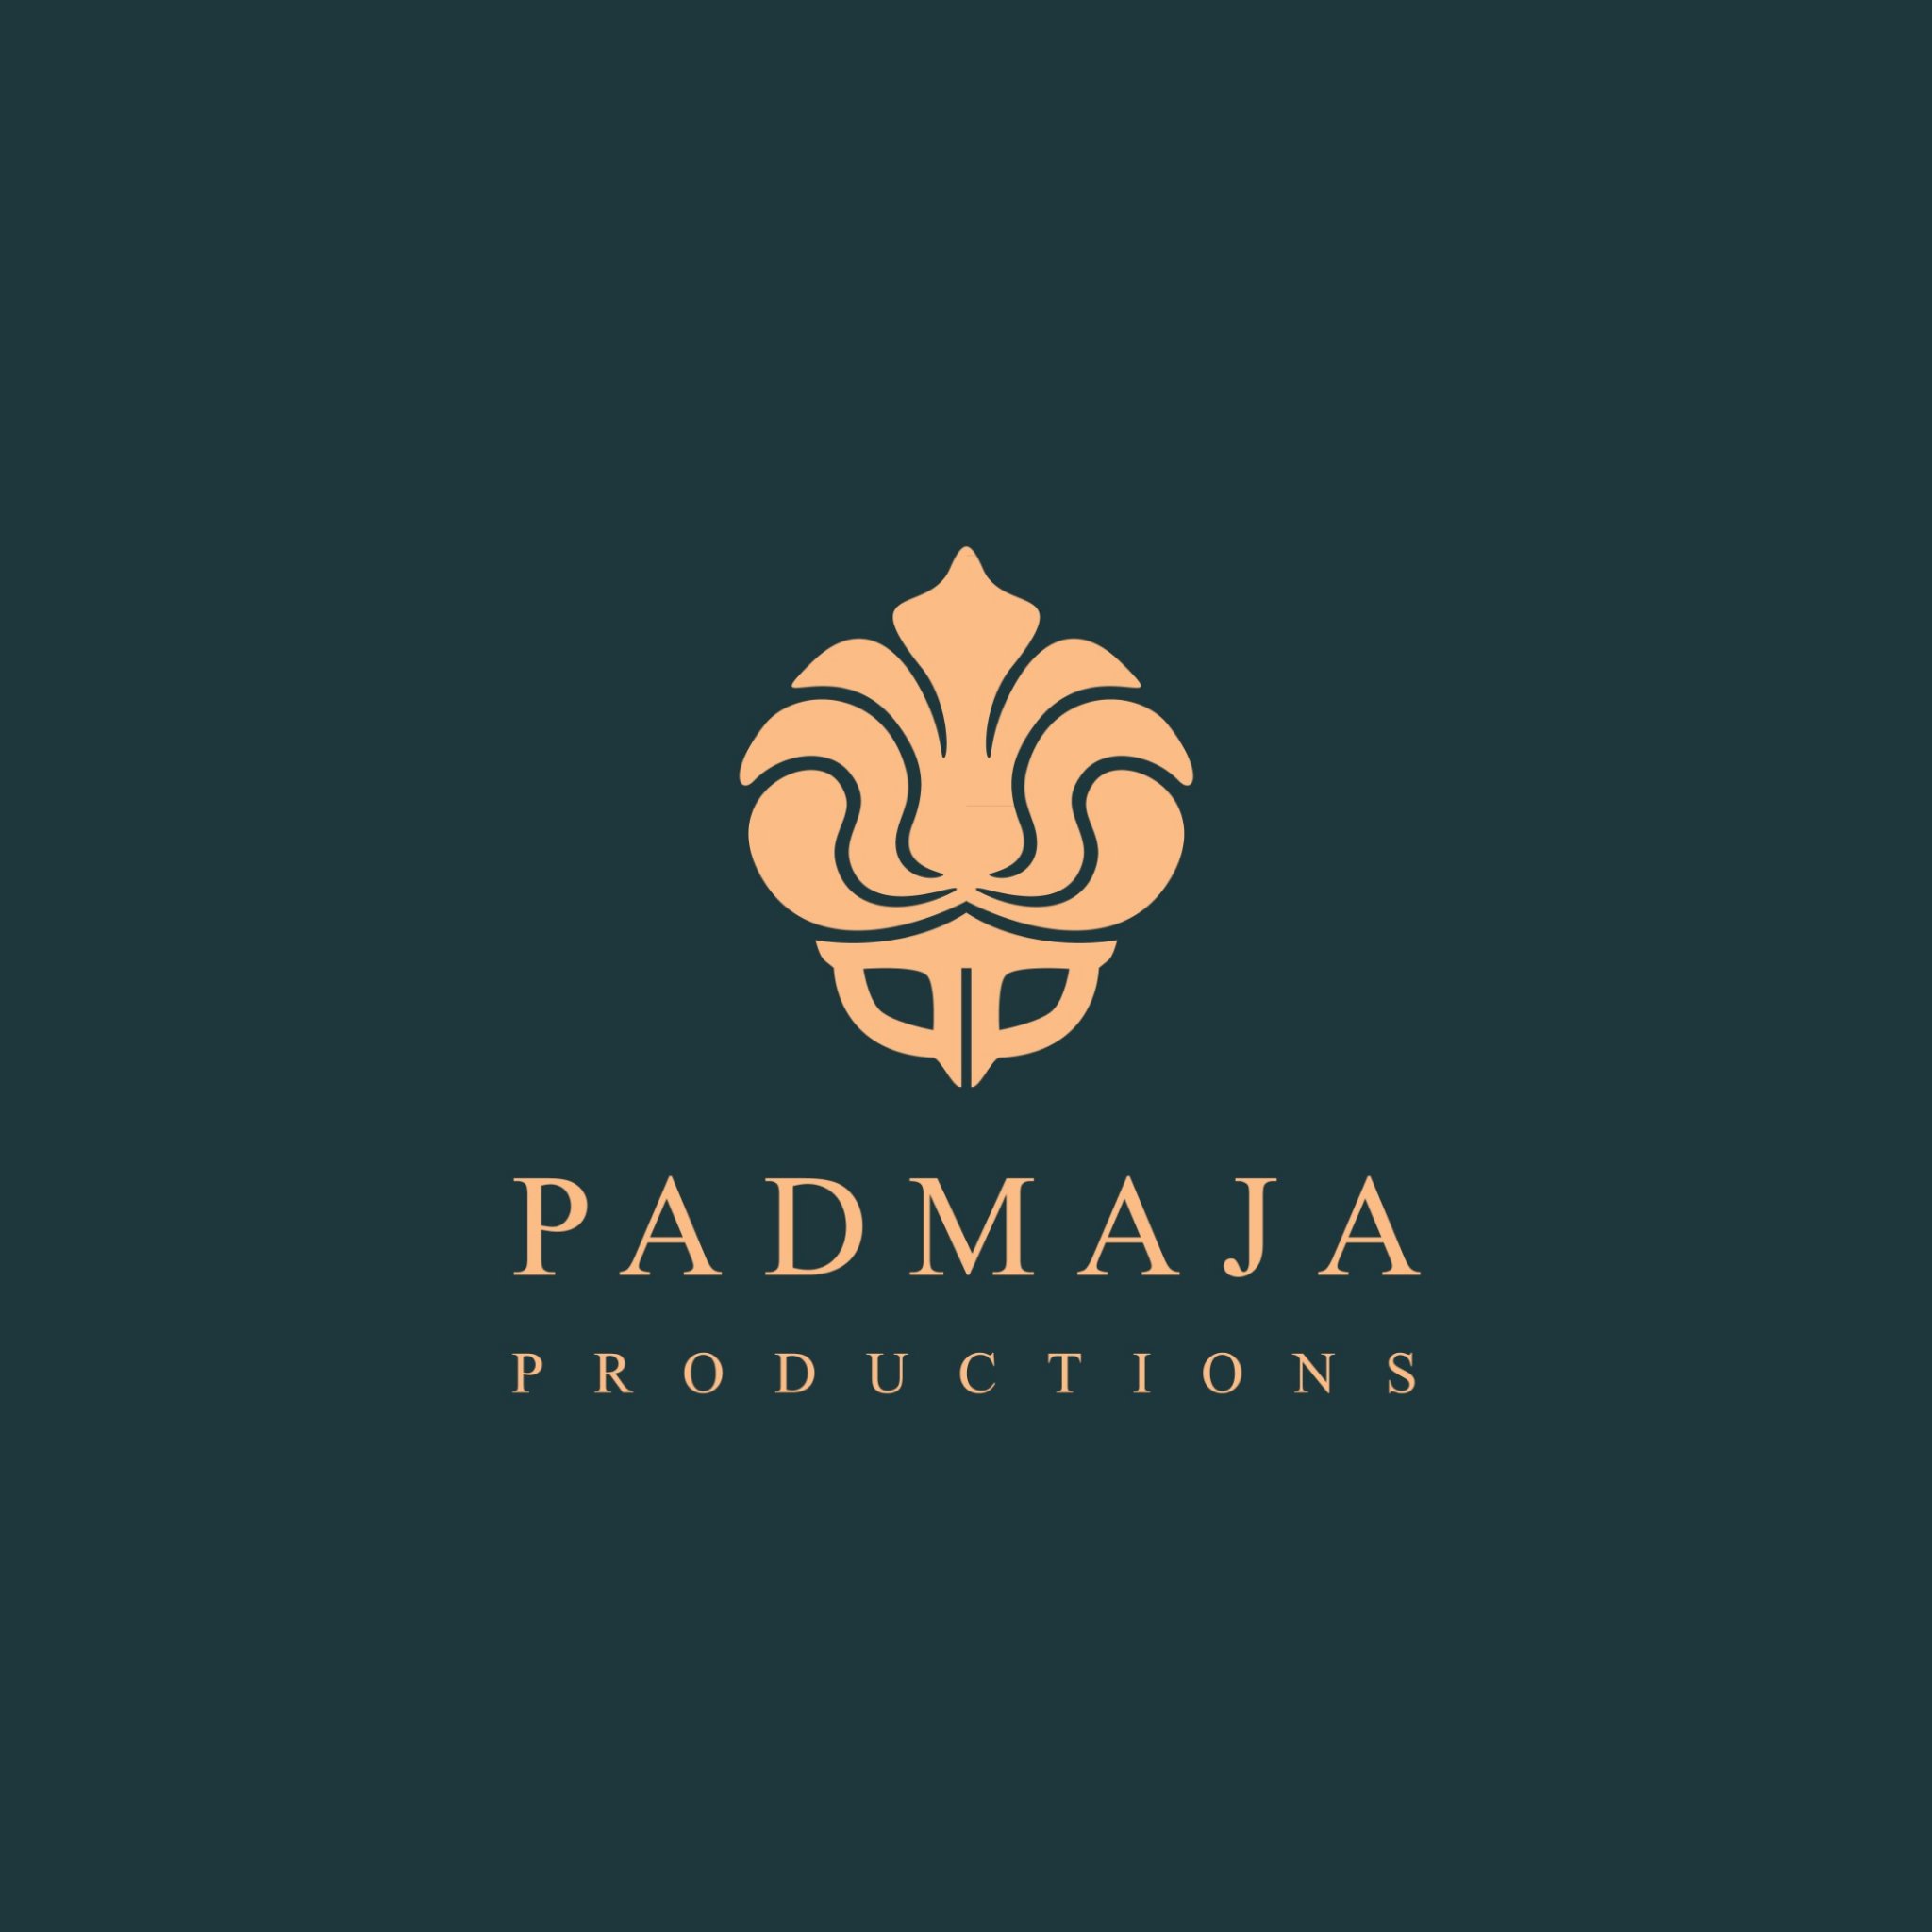 Padmaja Productions